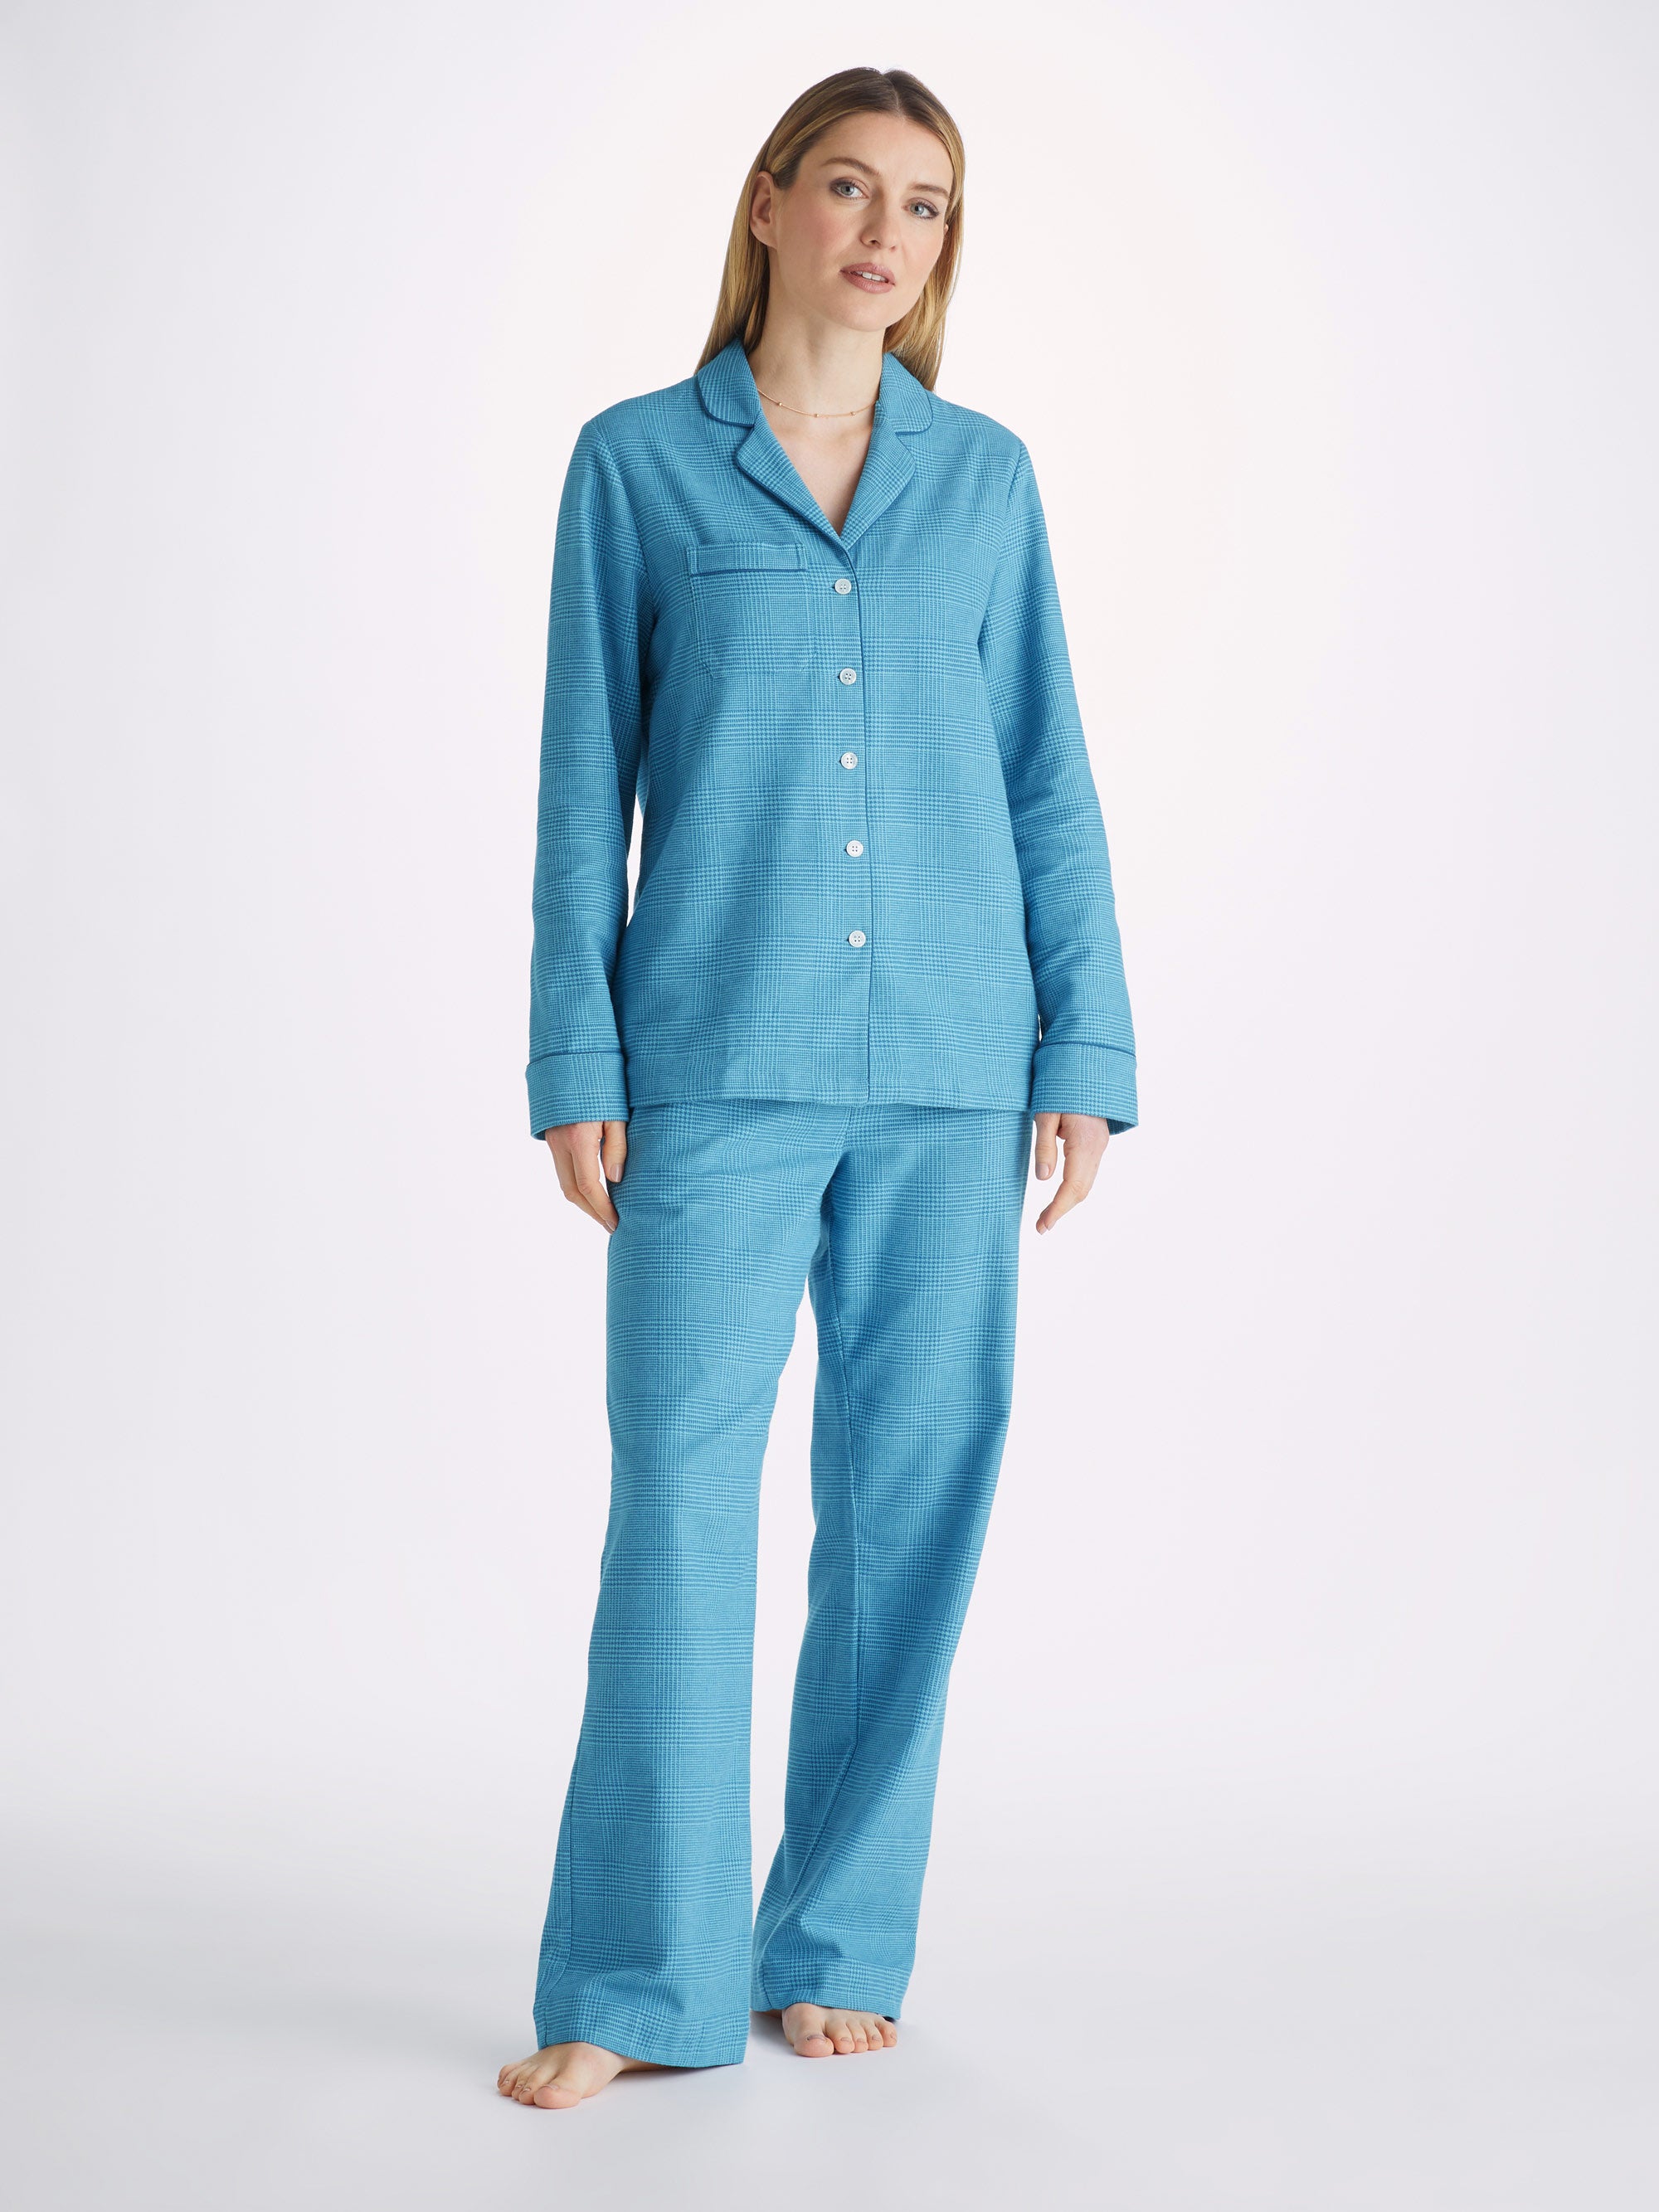 Luxury Women's Cotton Pajamas, Ladies Cotton PJs